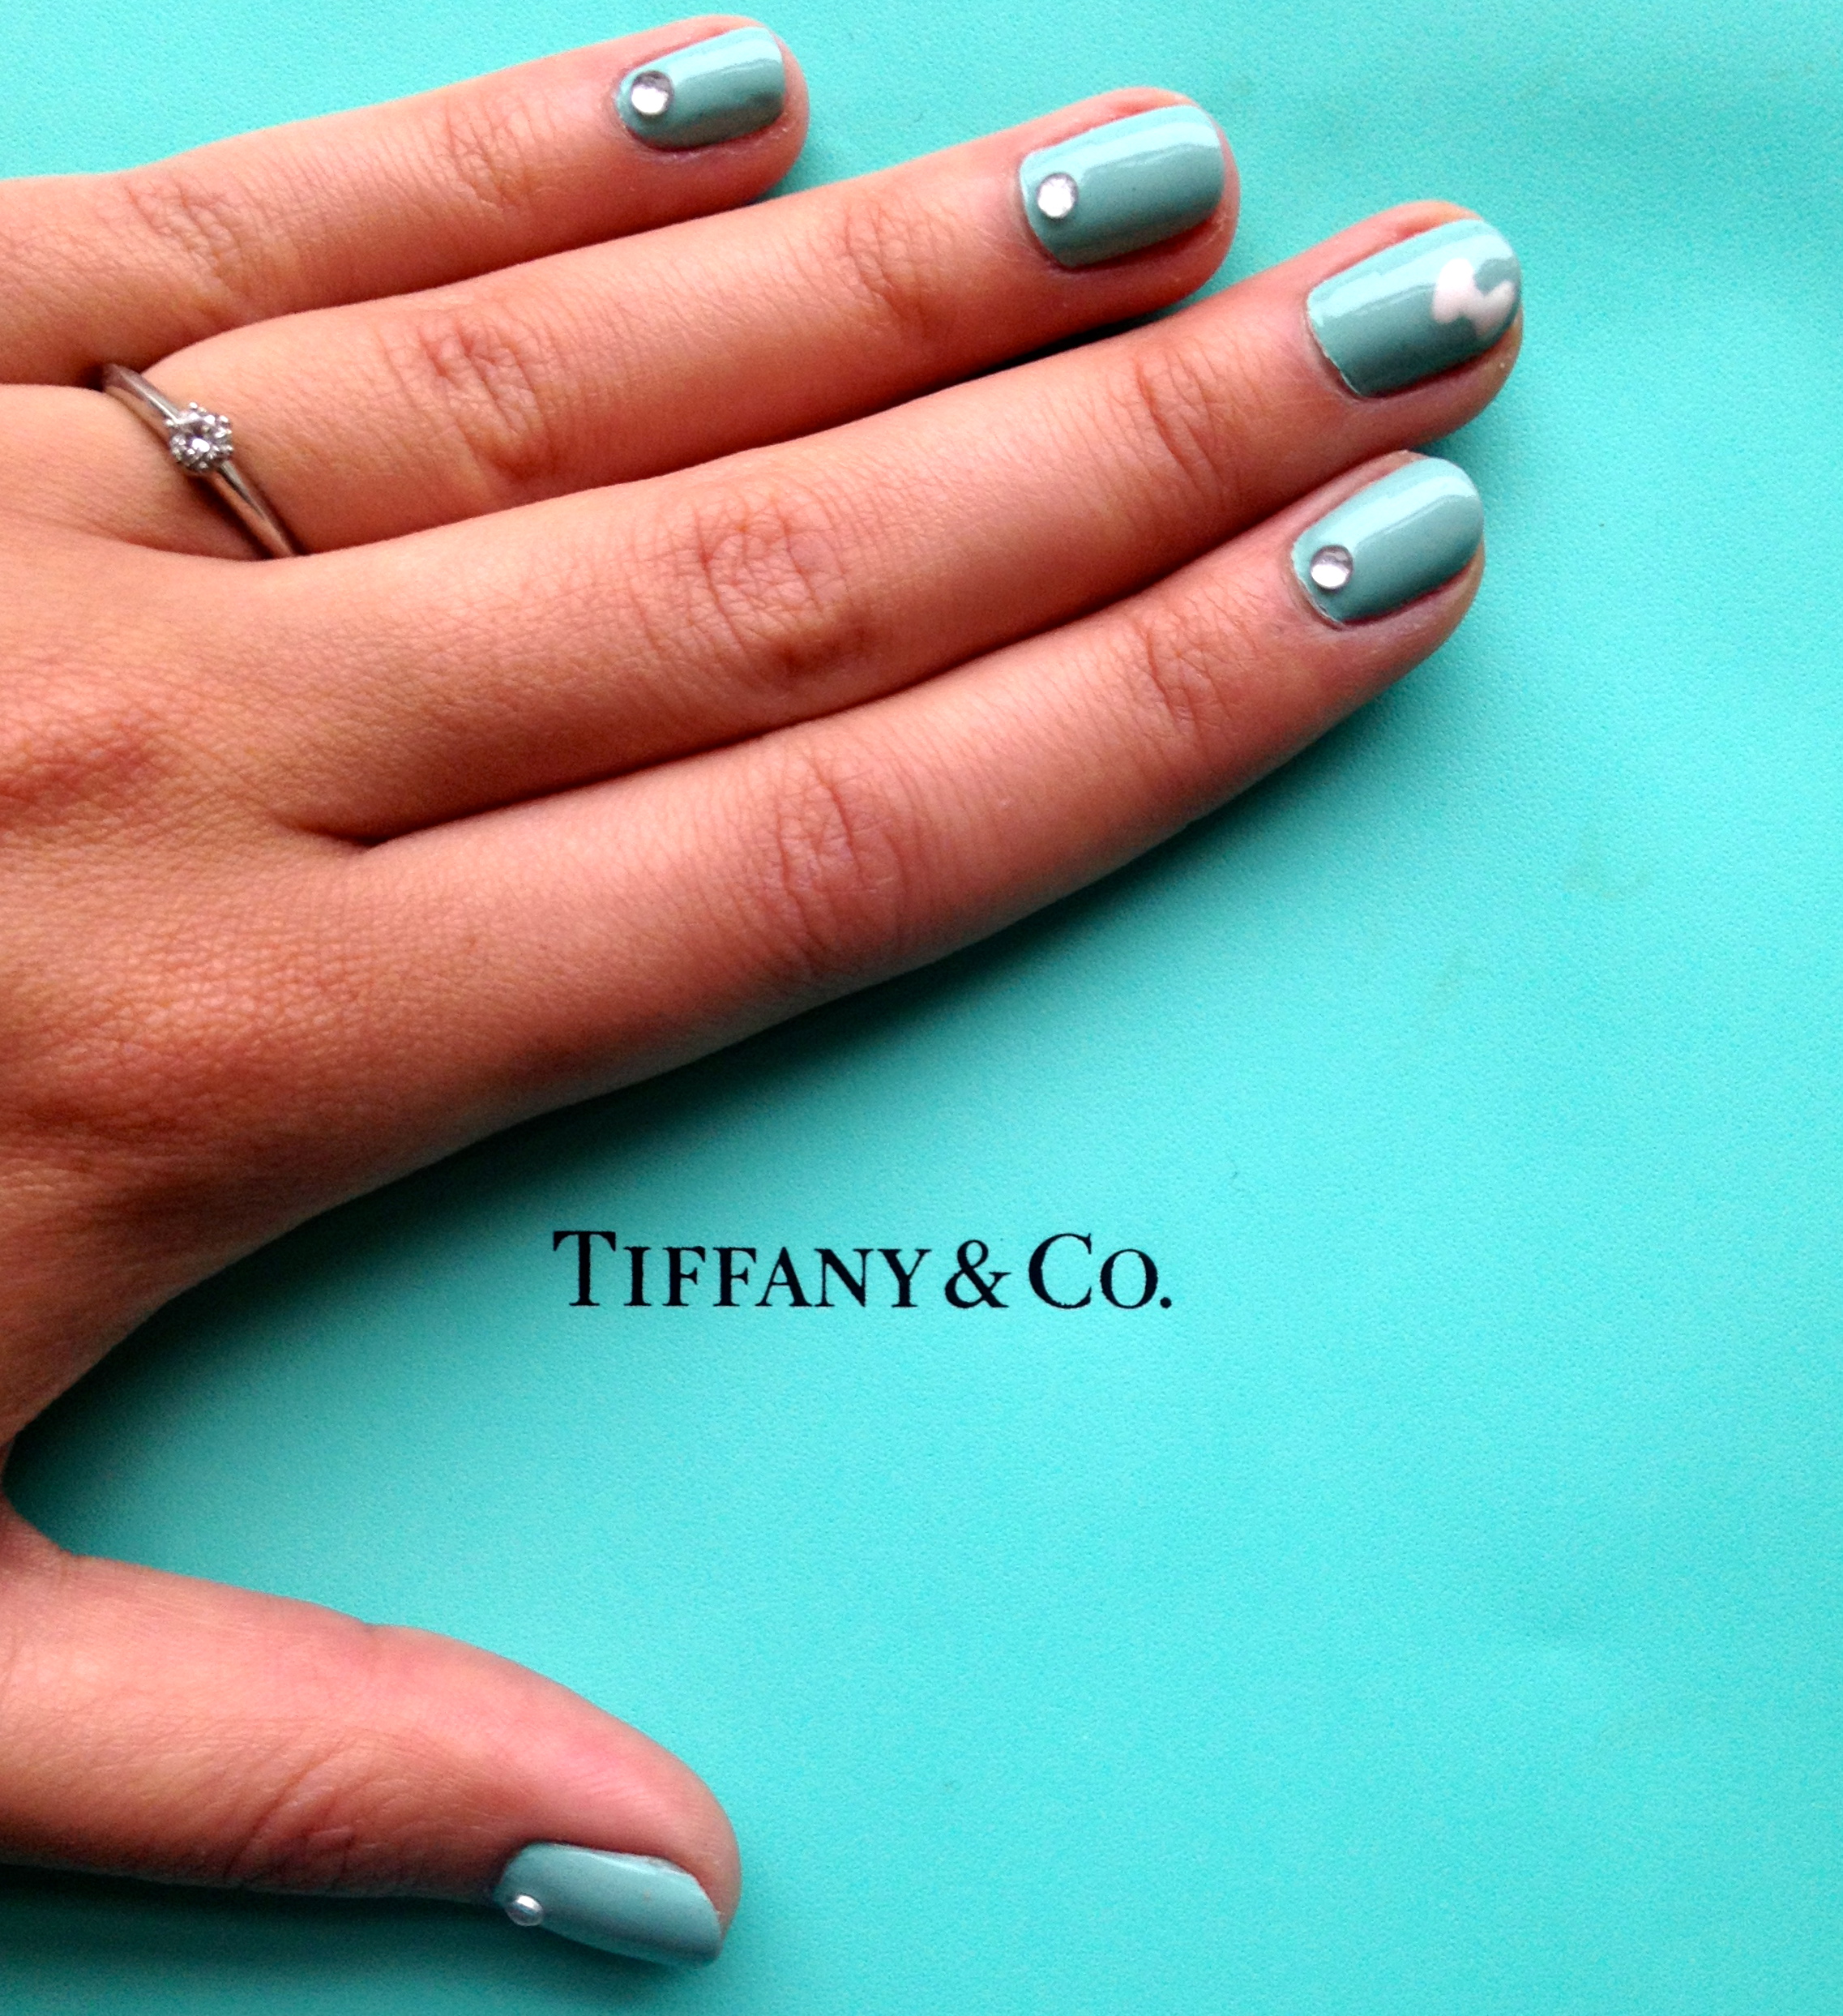  Tiffany  s Nail Art for Dummies